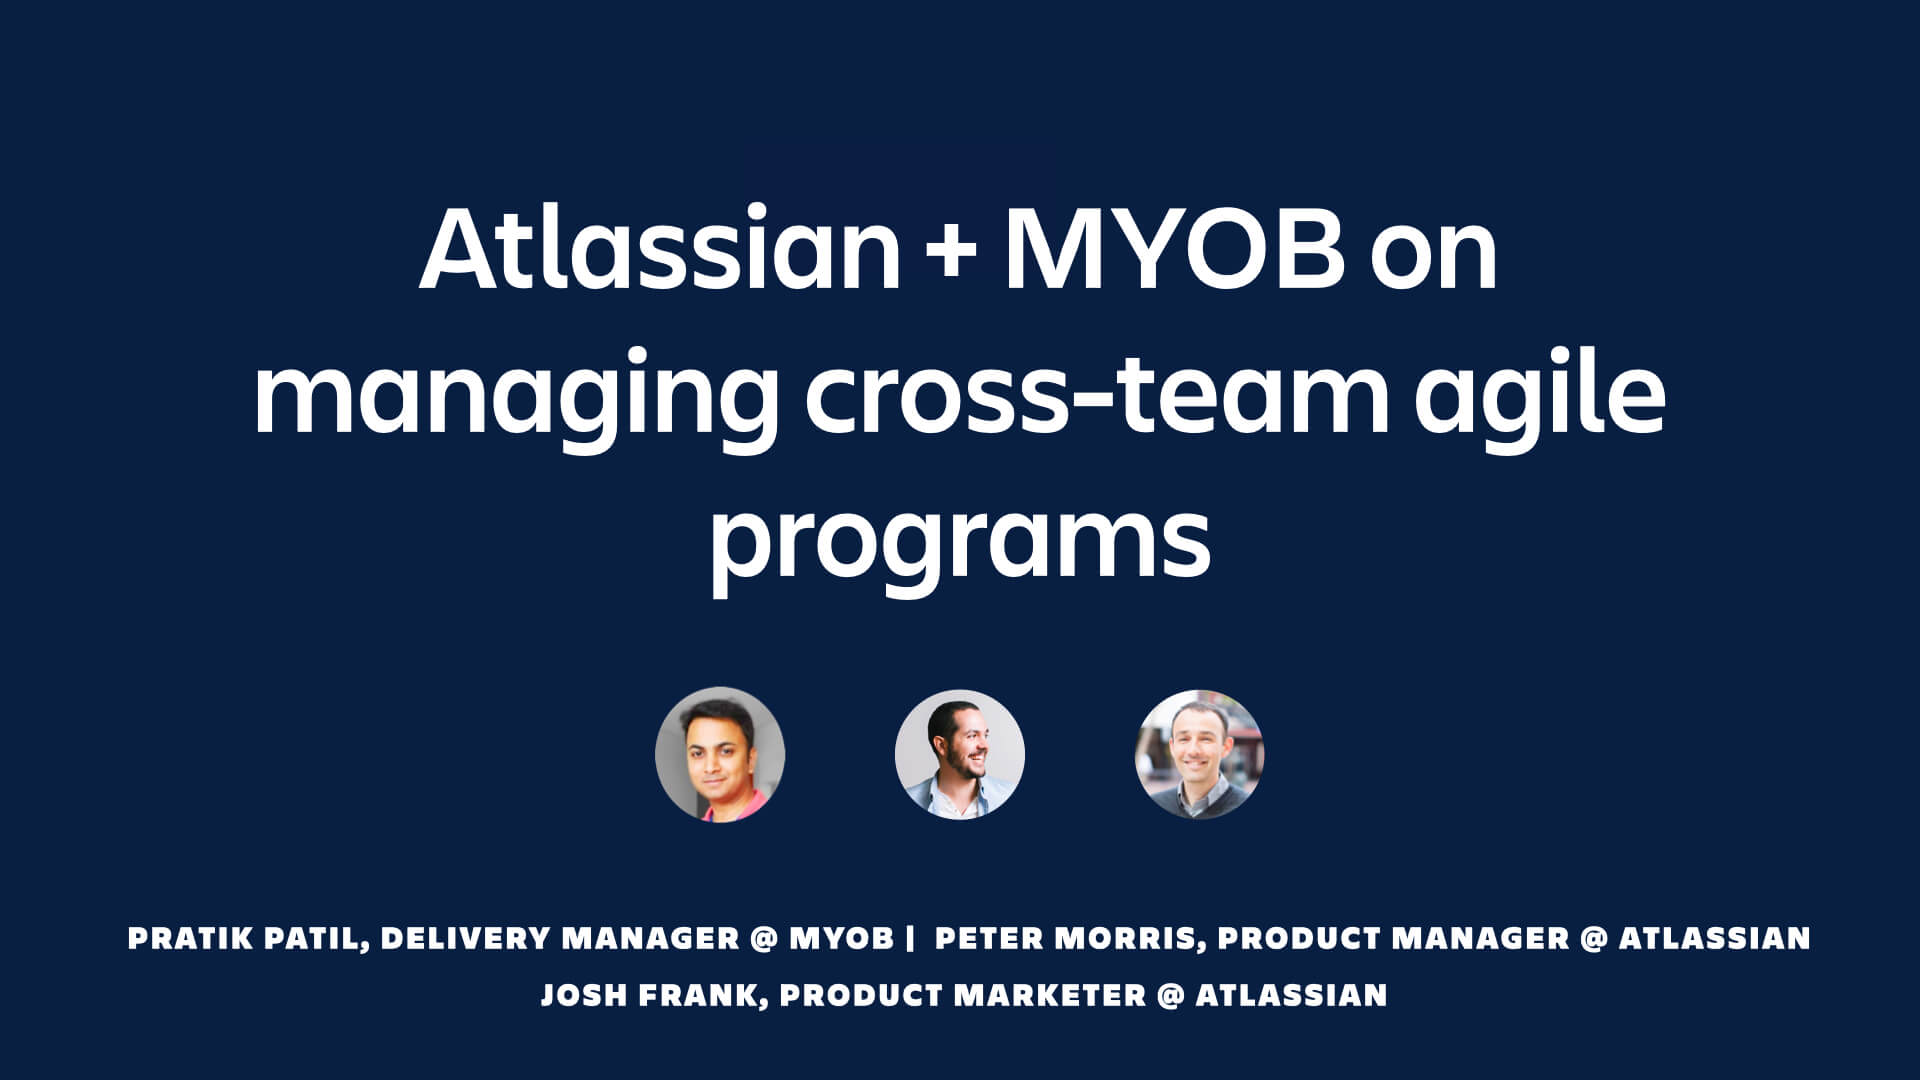 Atlassian and MYOB on managing cross-team agile programs